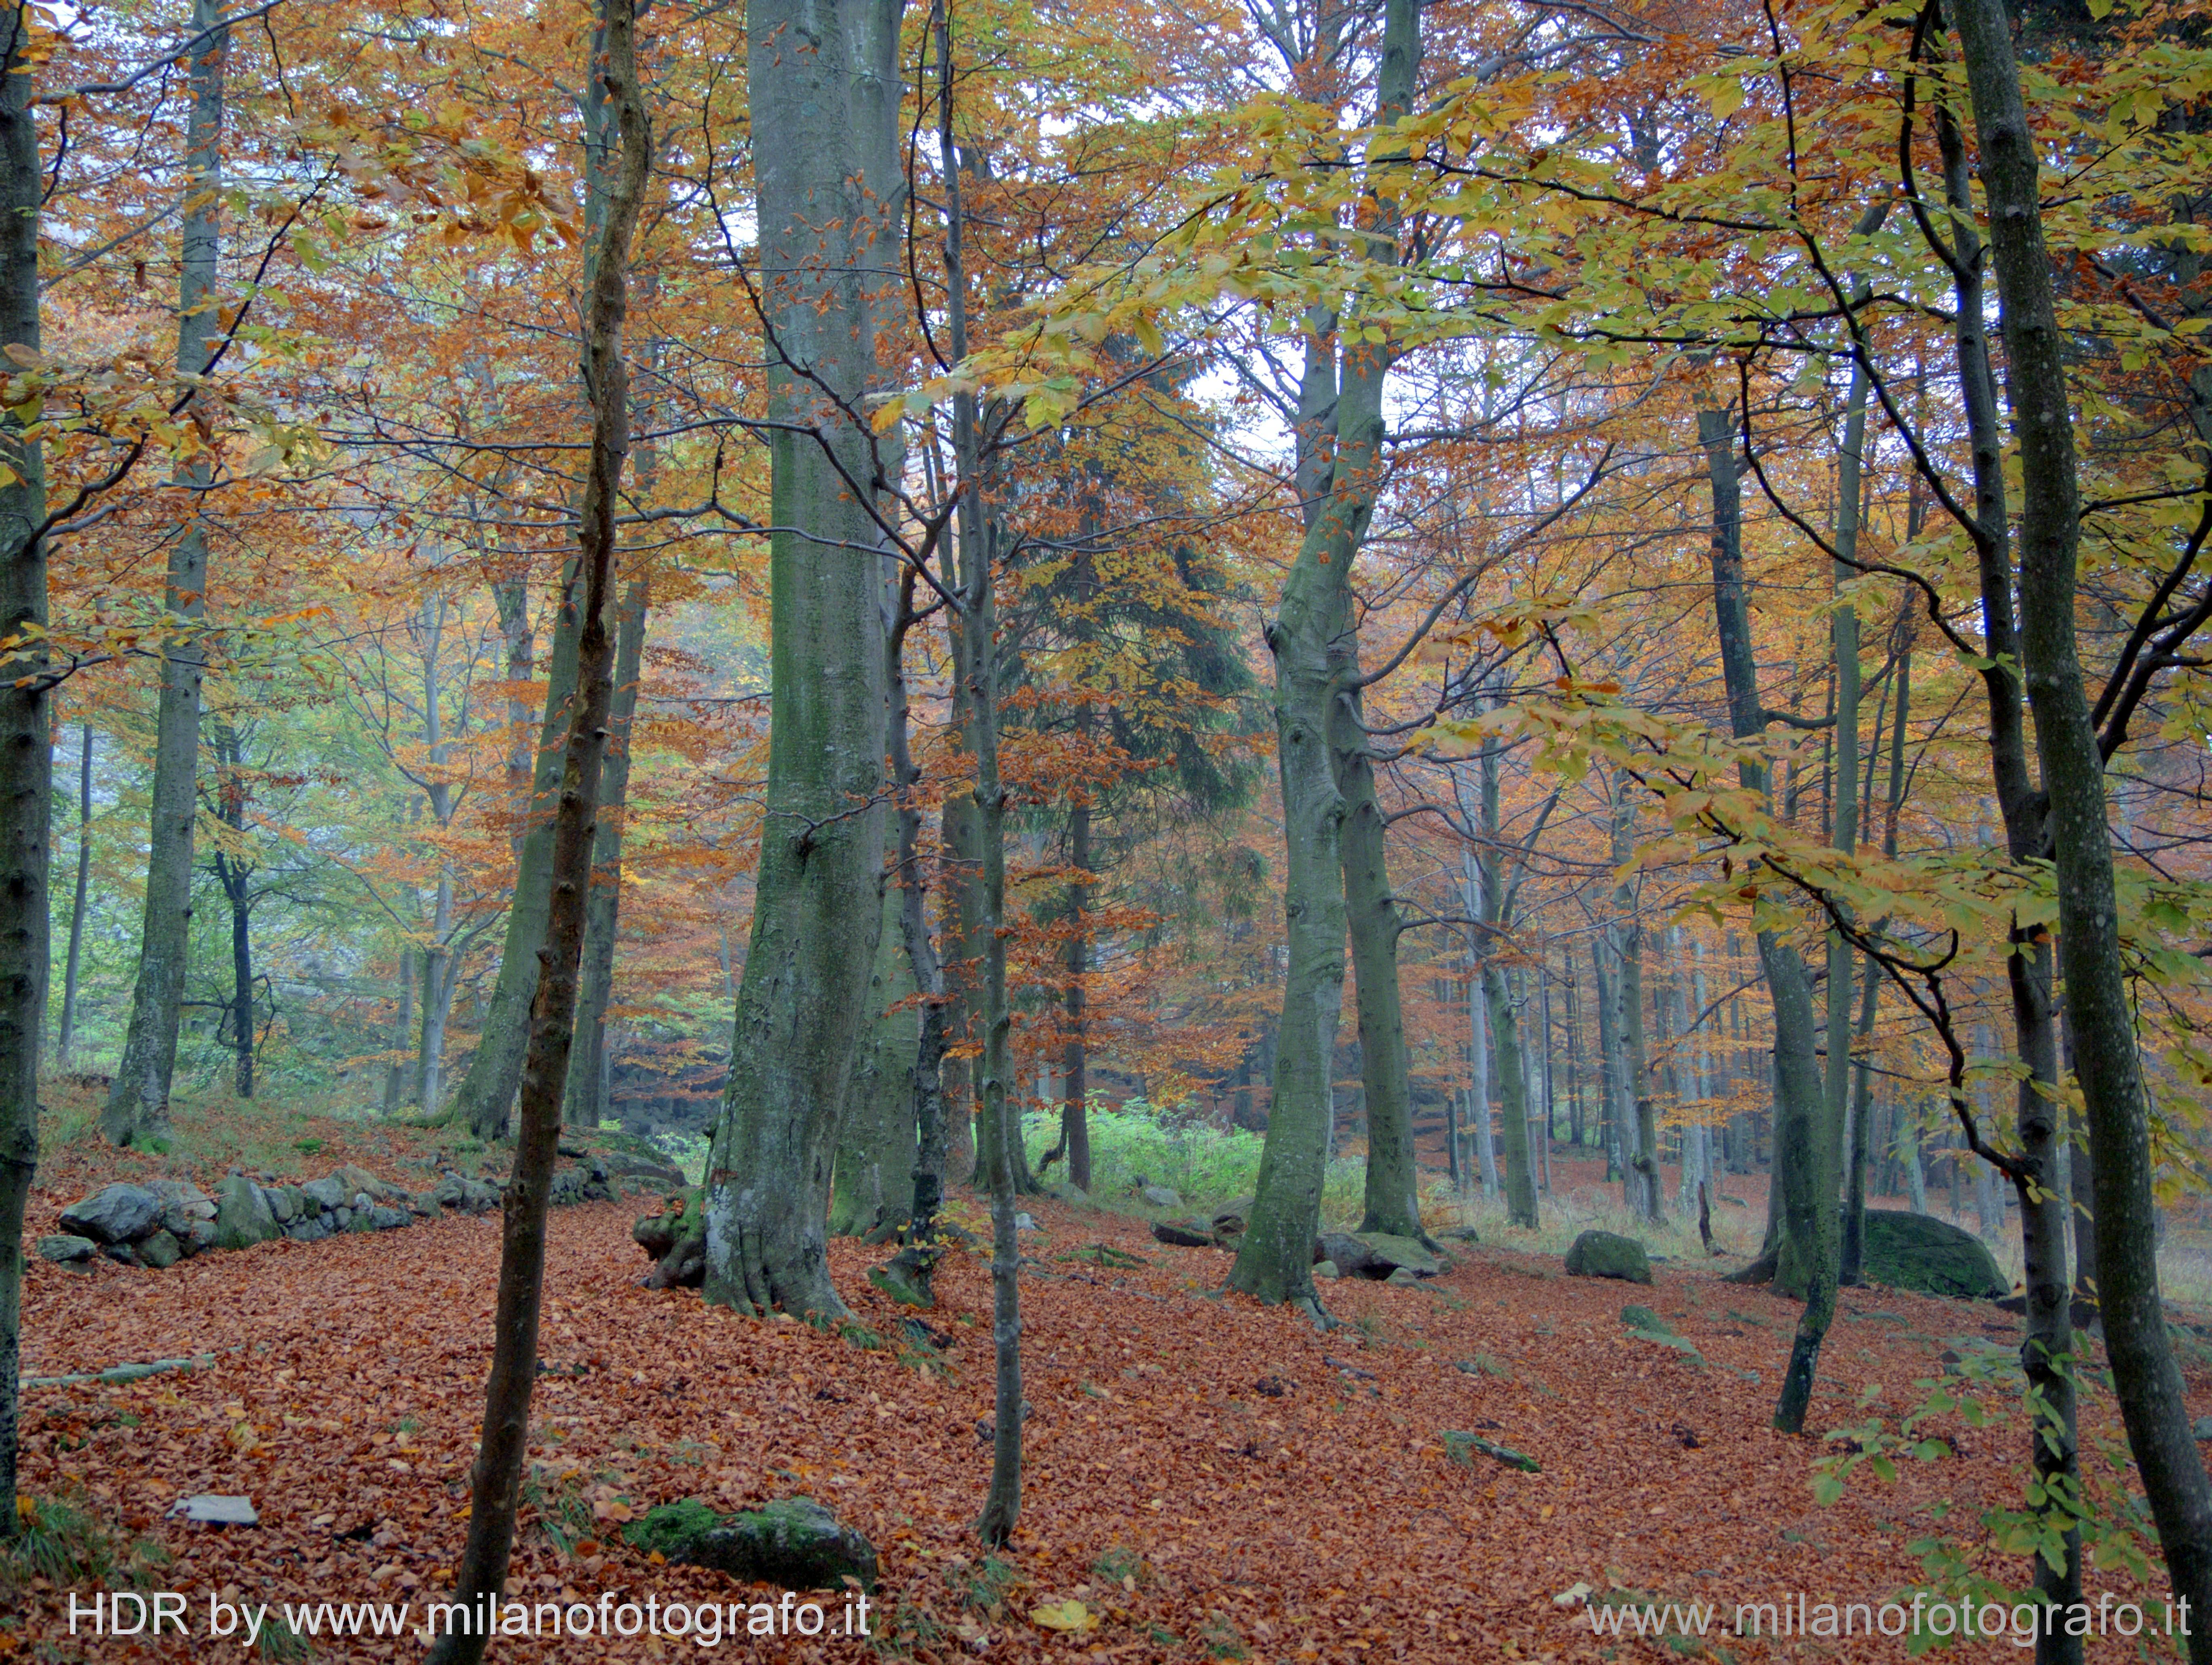 Biella, Italy: Autumn woods near the Sanctuary of Oropa - Biella, Italy